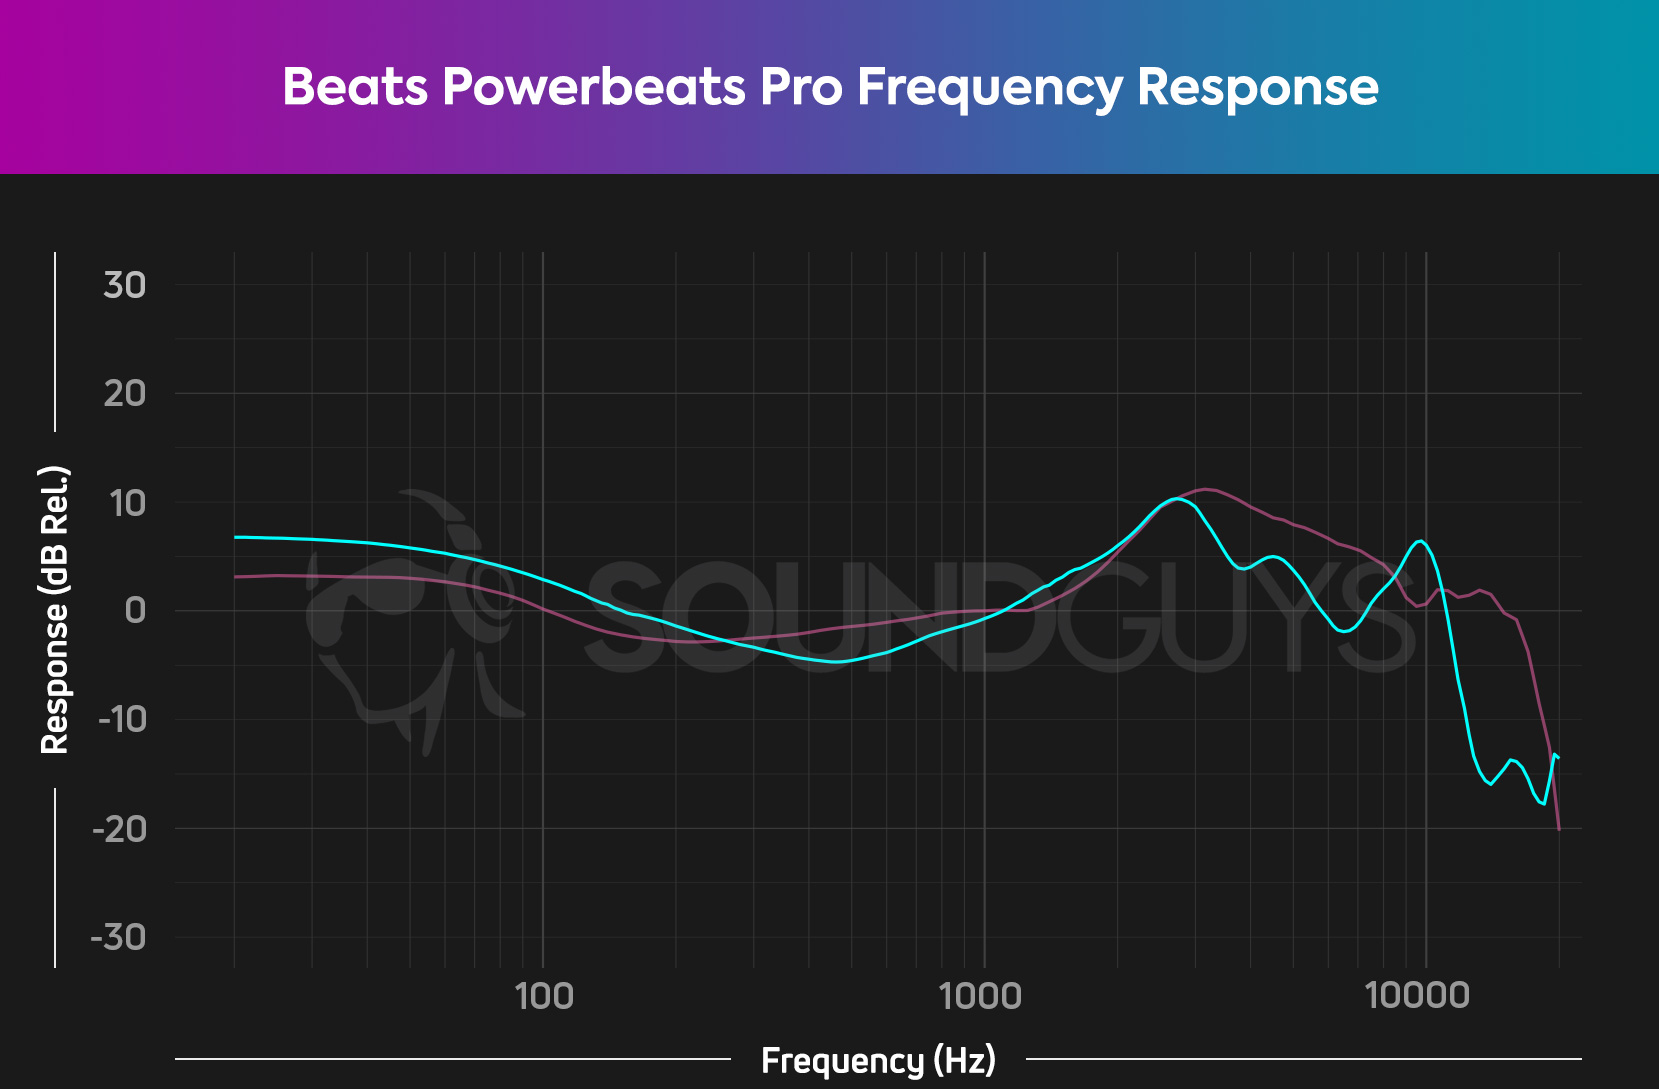 Beats PowerBeats Pro True无线锻炼耳塞的频率响应图表。